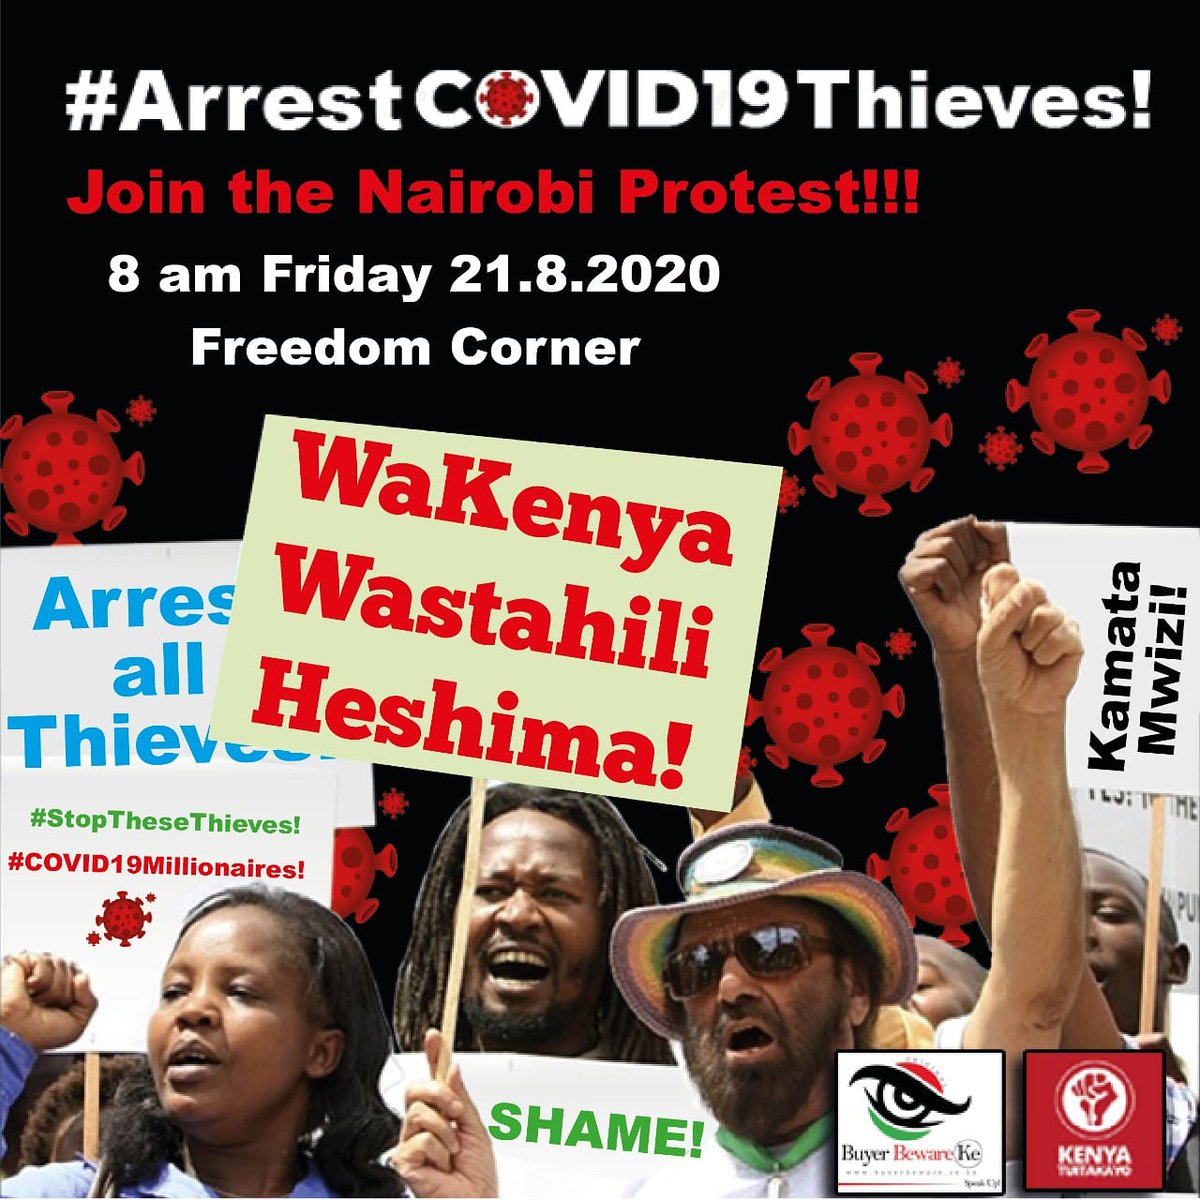 @USAIDKenya to withdraw 400B from Kenya over @Kemsa_Kenya #covid19millionares #COVID19KE theft...

@WanjeriNderu #STOPTheseTHIEVES I am told you are a person of interest because of 👇🏾👇🏾👇🏾

See you tomorrow at Freedom Corner Uhuru Park!

#ArrestCOVID19Thieves